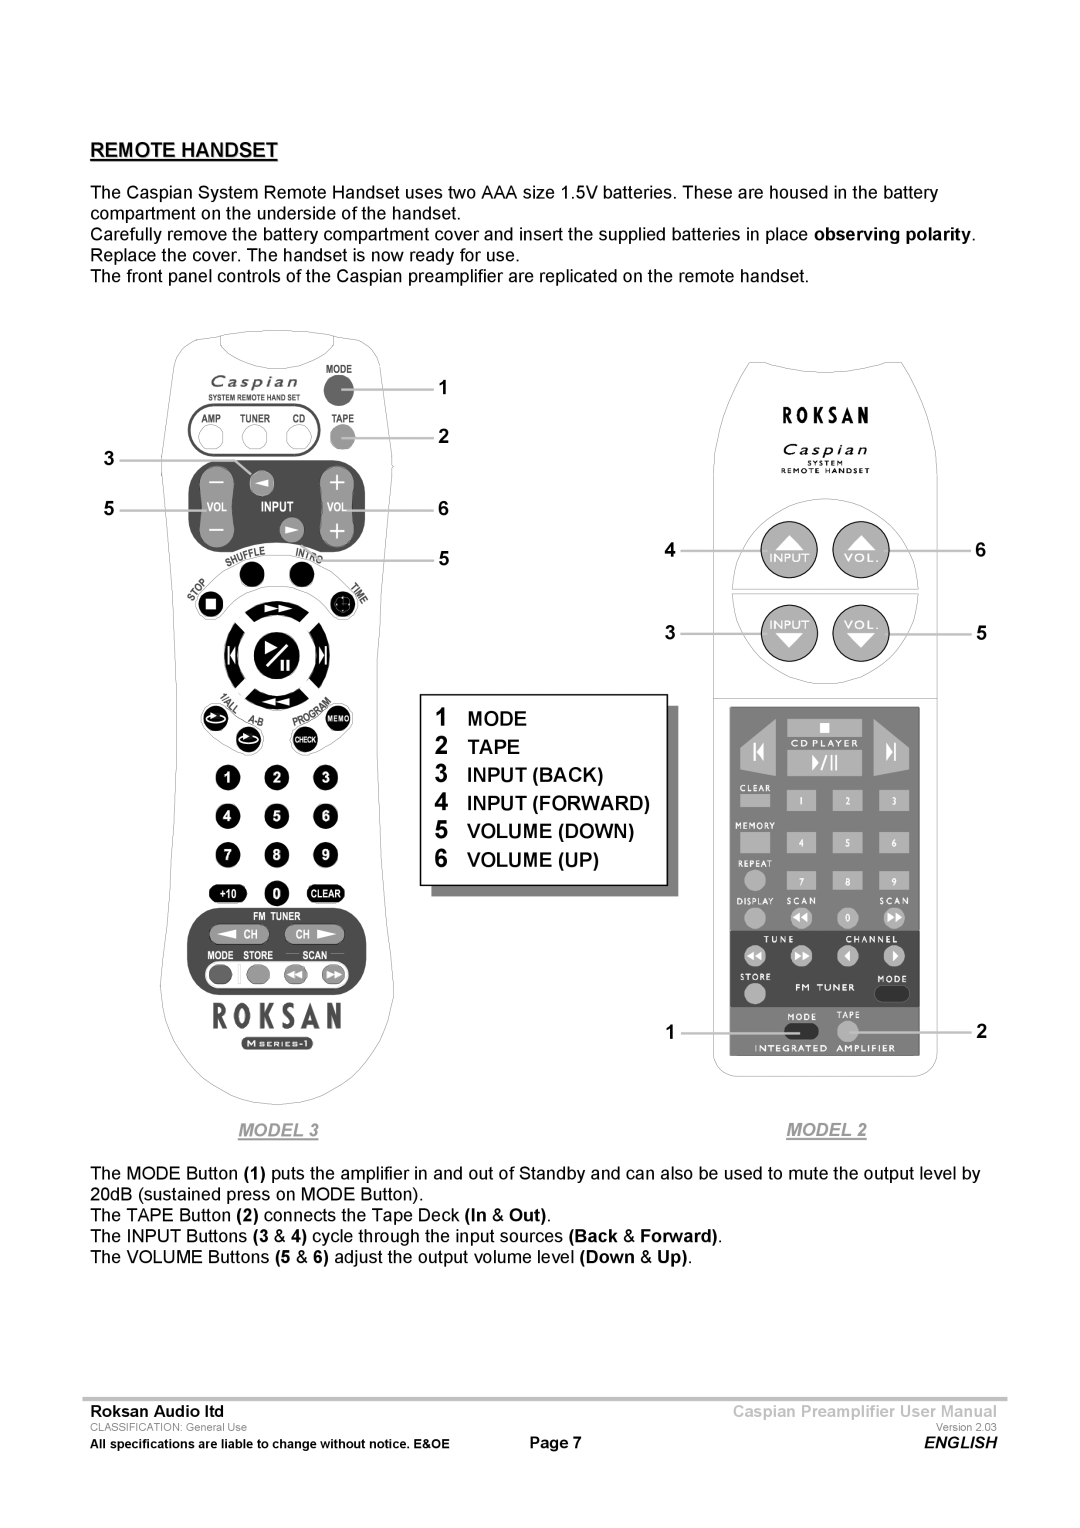 Roksan Audio M series --1 user manual Remote Handset, Mode Tape Input Back Input Forward Volume Down Volume UP 